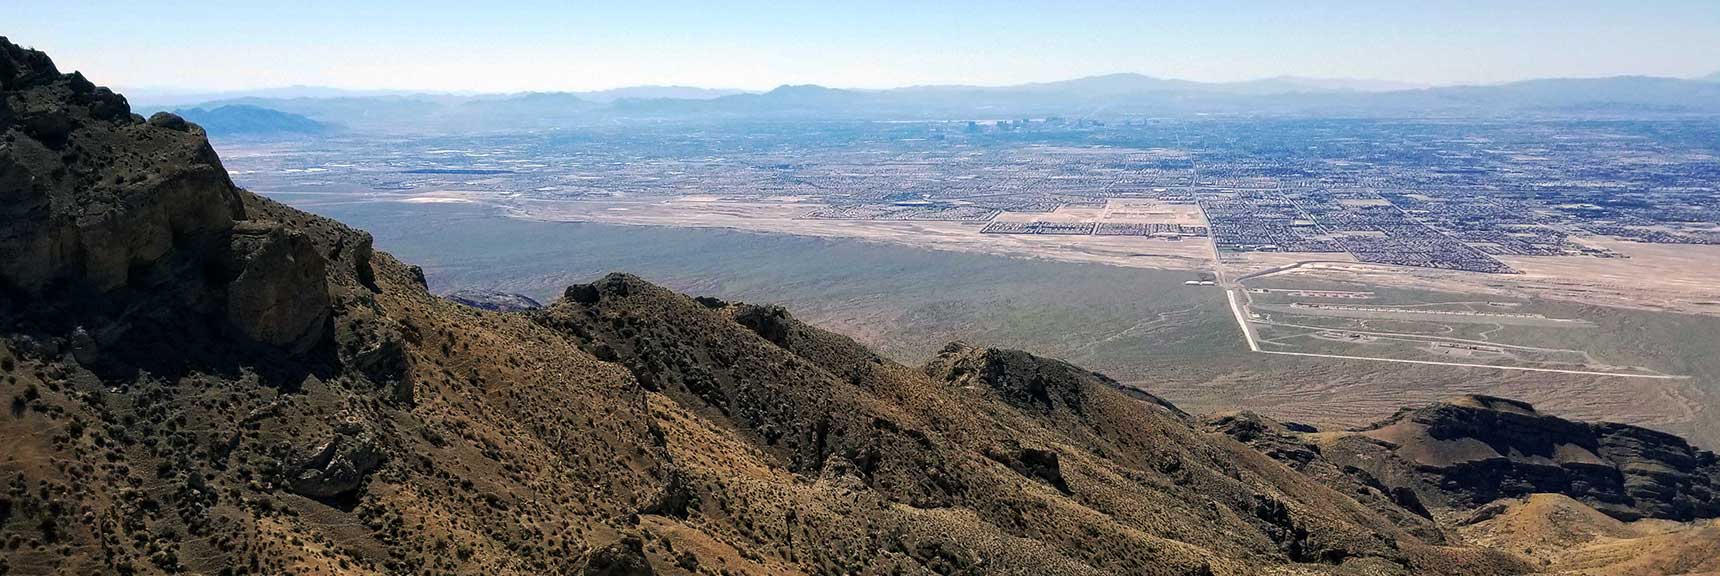 View of Las Vegas from Gass Peak Mid Summit North of Las Vegas, Nevada